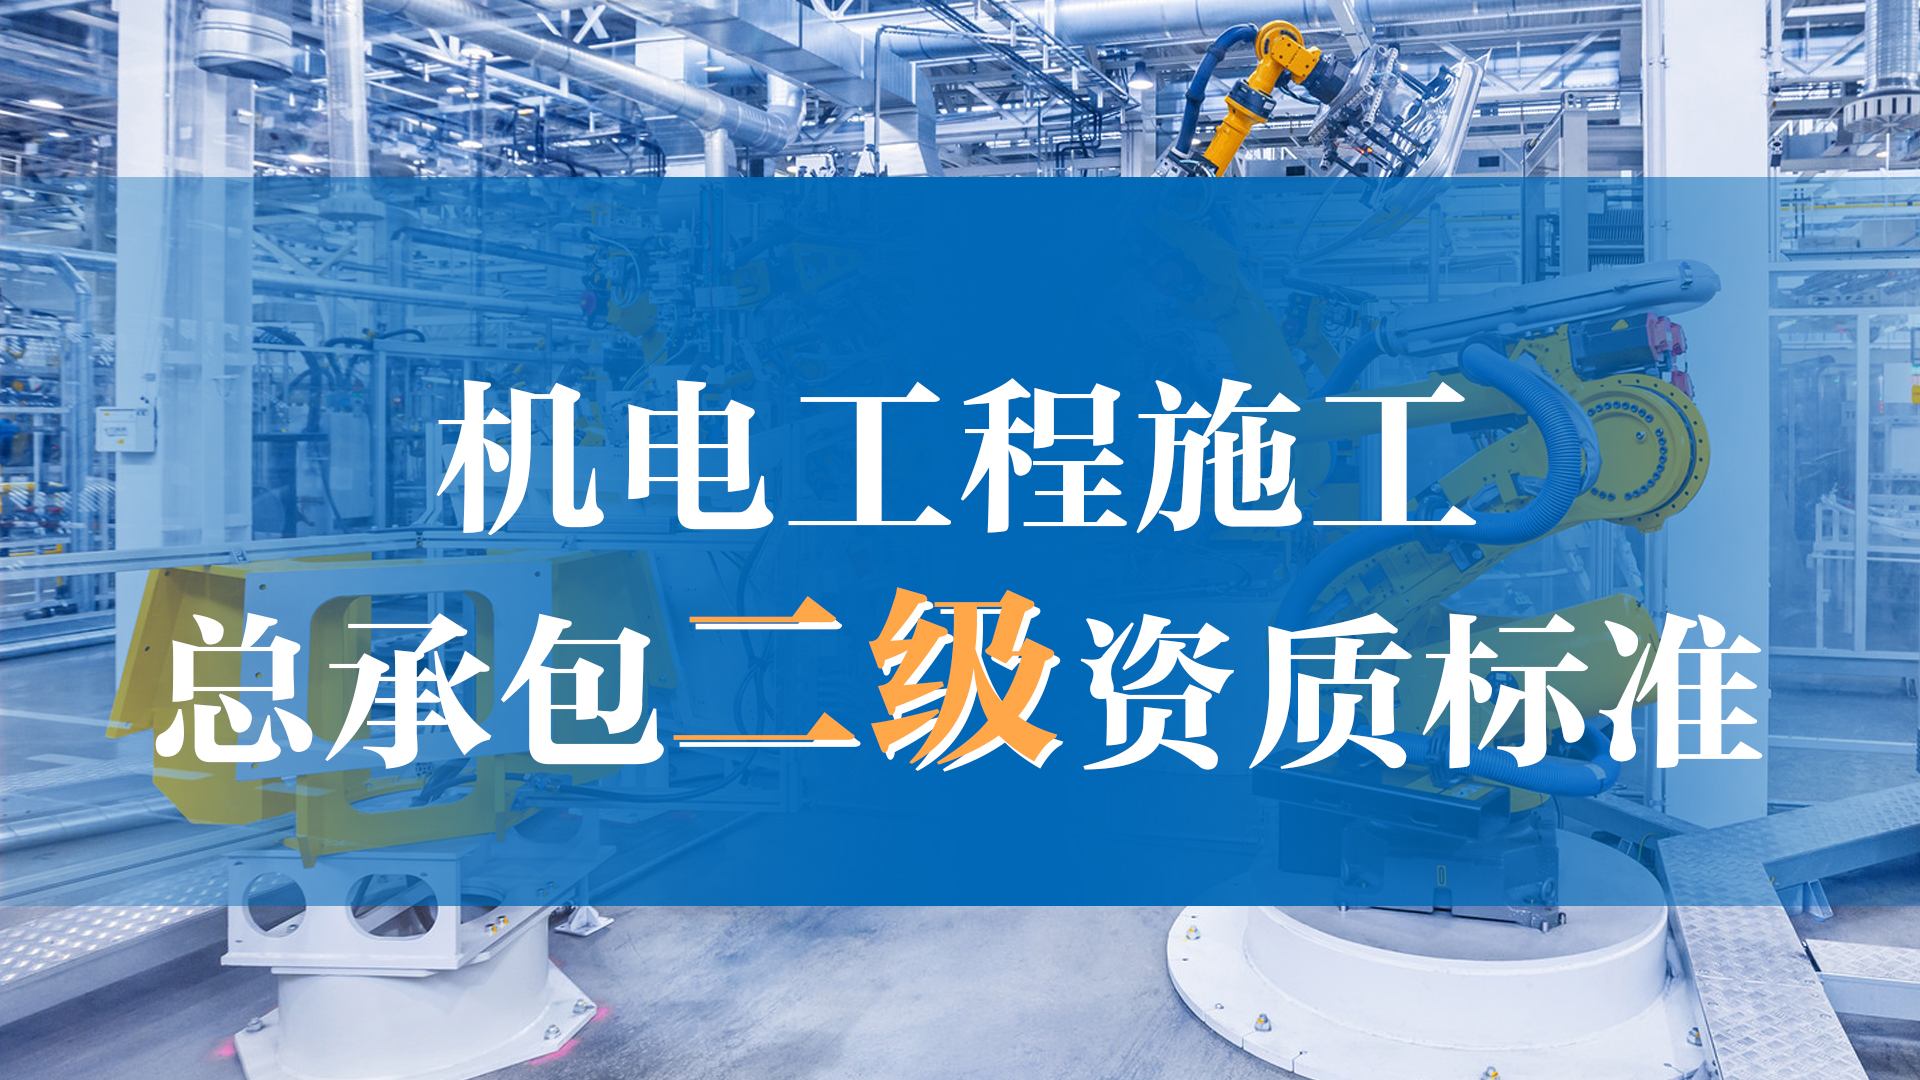 jbo竞博官网|
机电工程施工总承包二级资质尺度